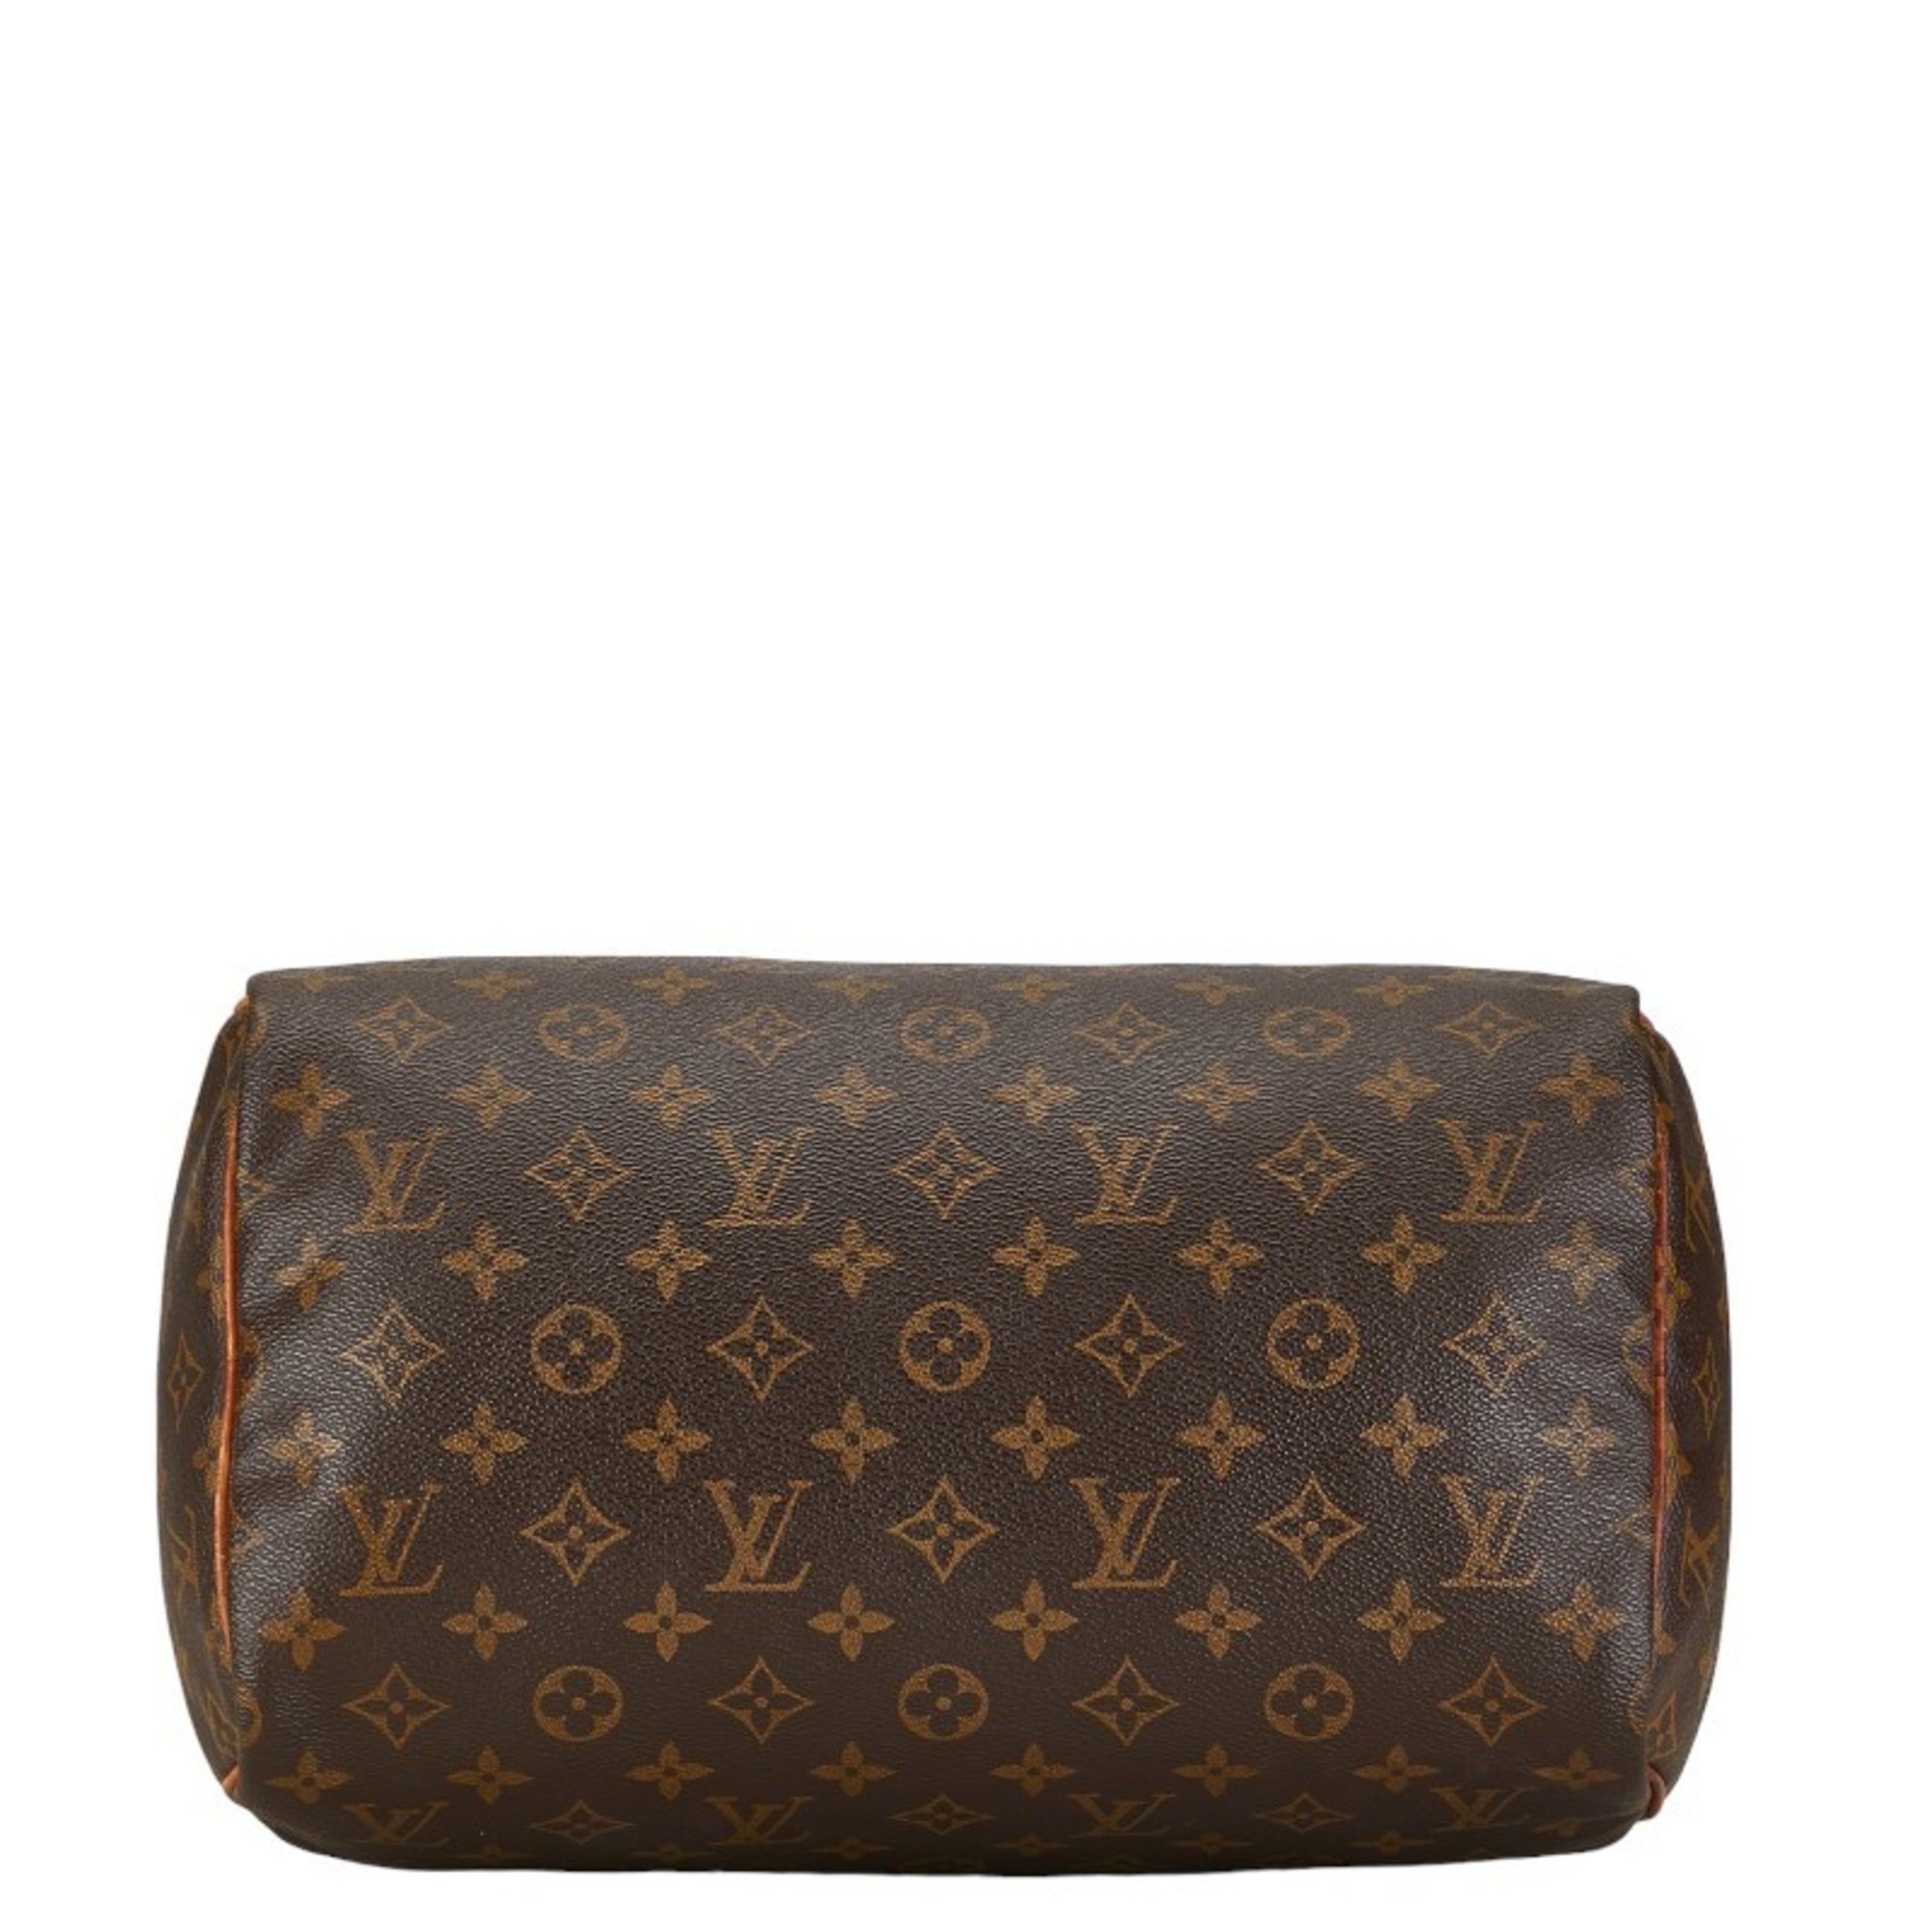 Louis Vuitton Monogram Speedy 30 Handbag Shoulder Bag 2WAY M41526 Brown PVC Leather Women's LOUIS VUITTON